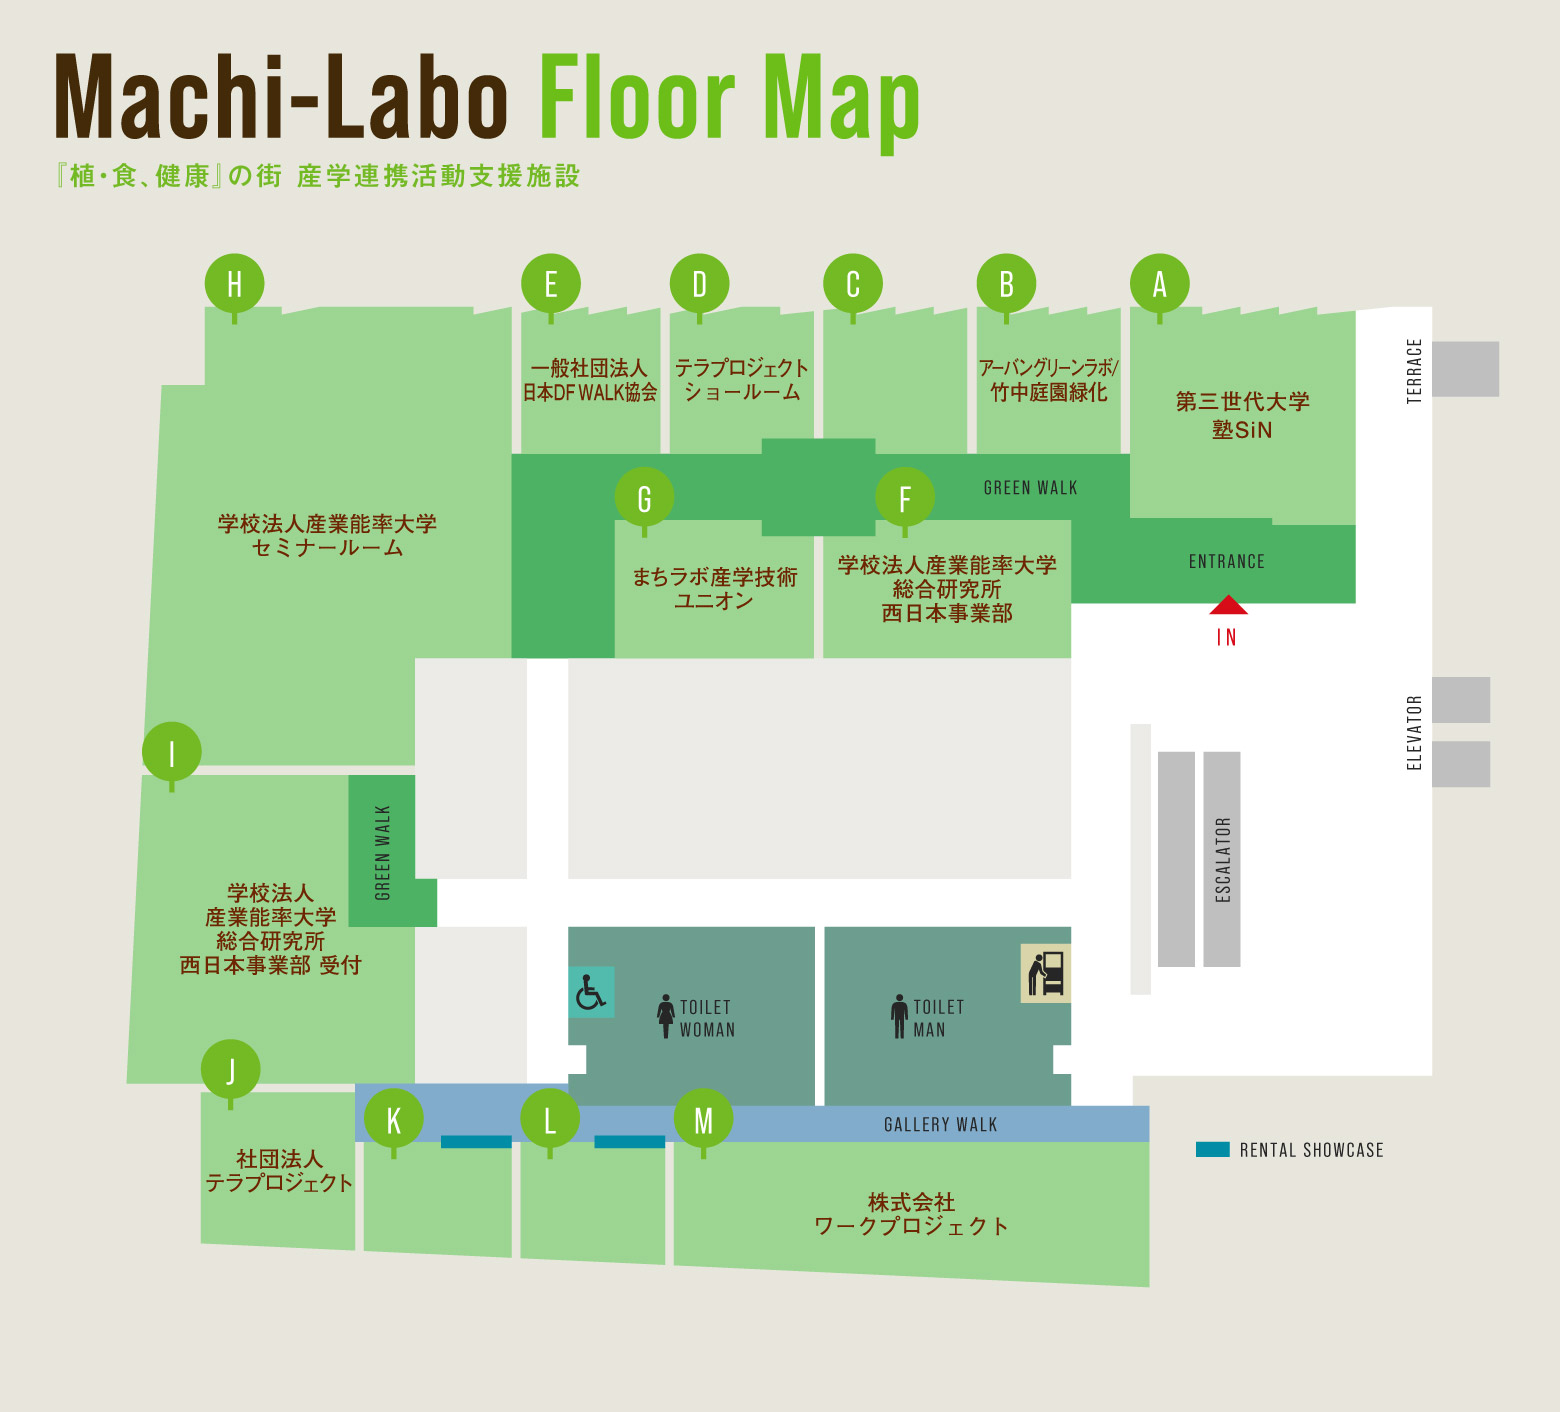 Machi-Labo Floor Map